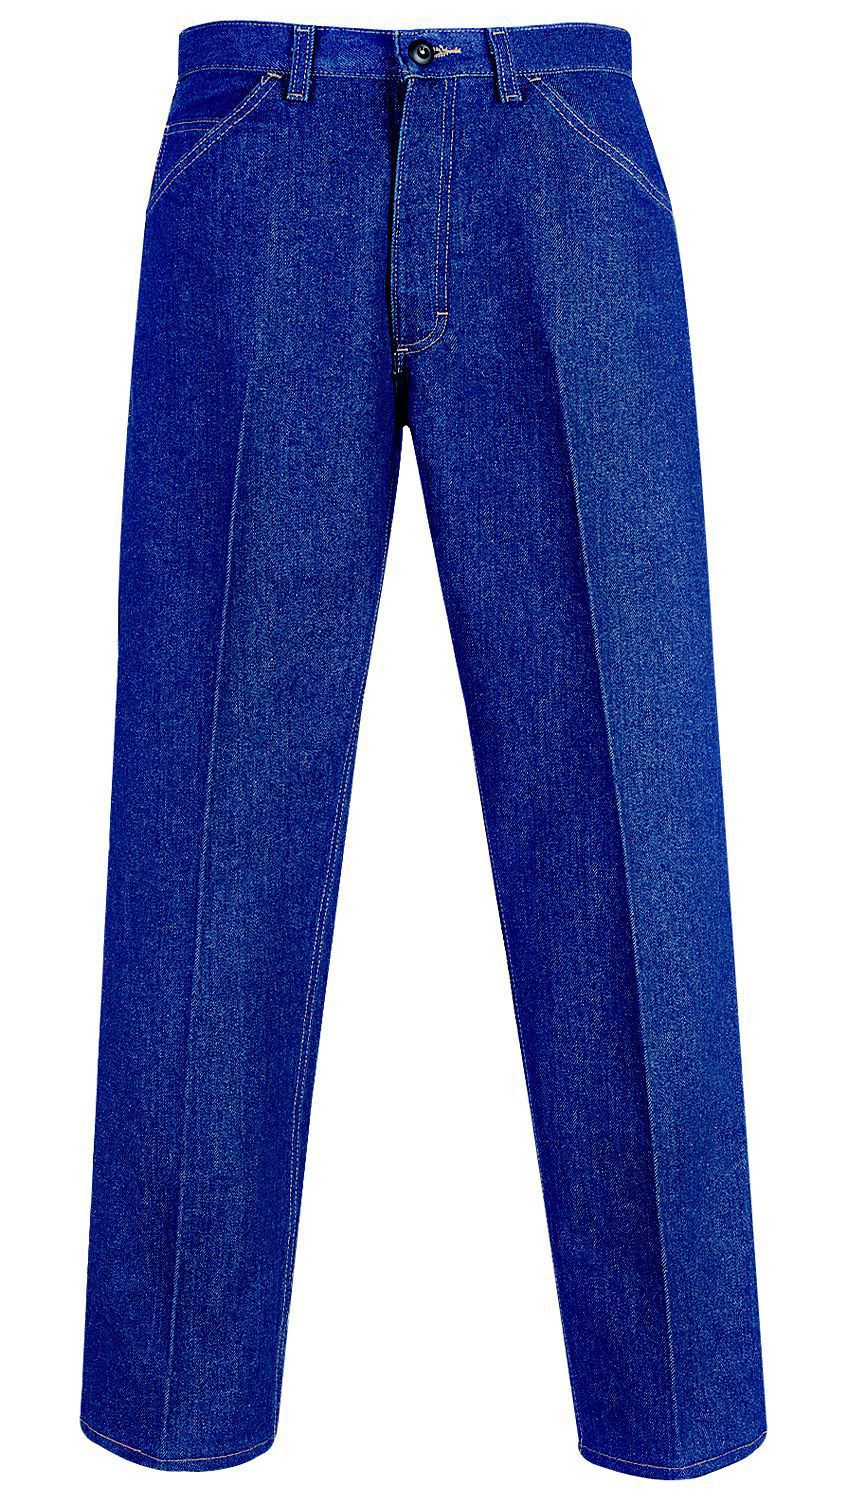 Pre-Washed Denim Fire Resistant Jeans